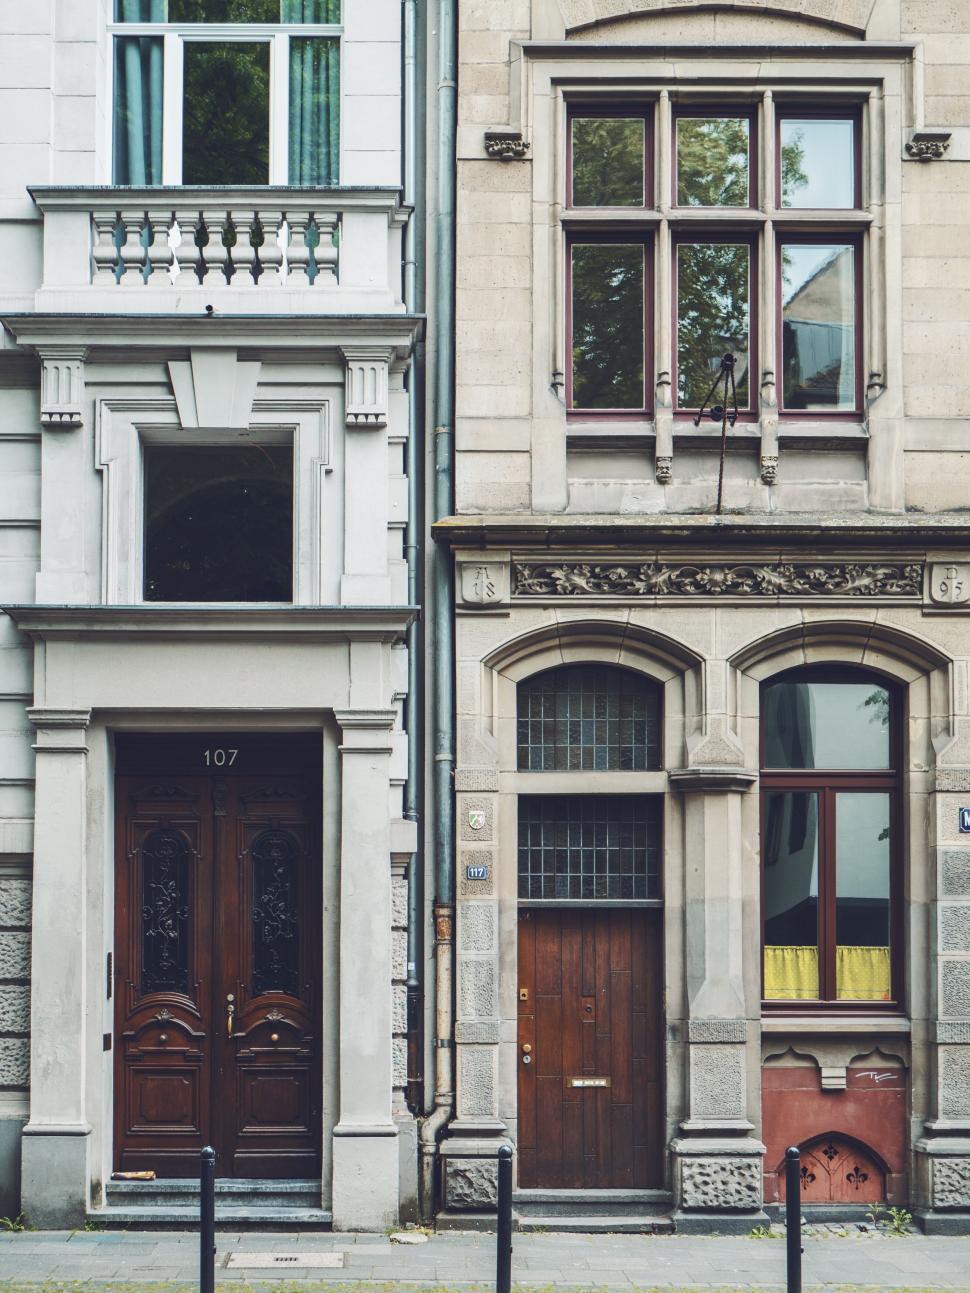 Free Image of Elegant historical doors in urban architecture 